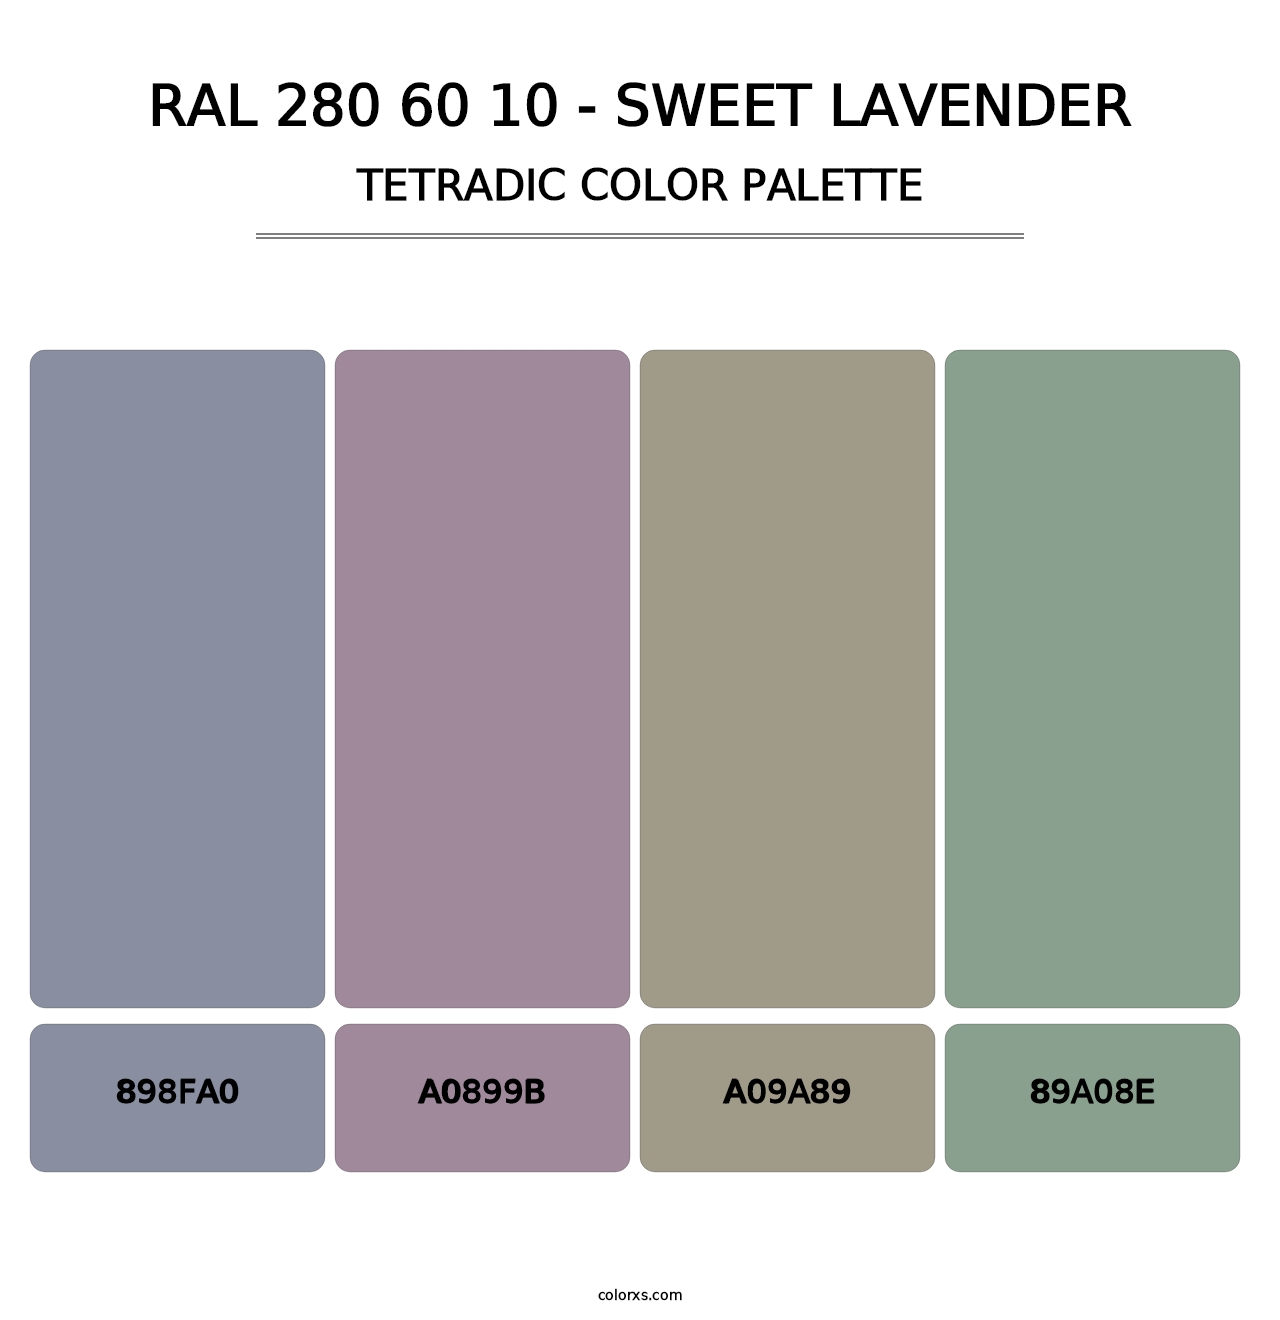 RAL 280 60 10 - Sweet Lavender - Tetradic Color Palette